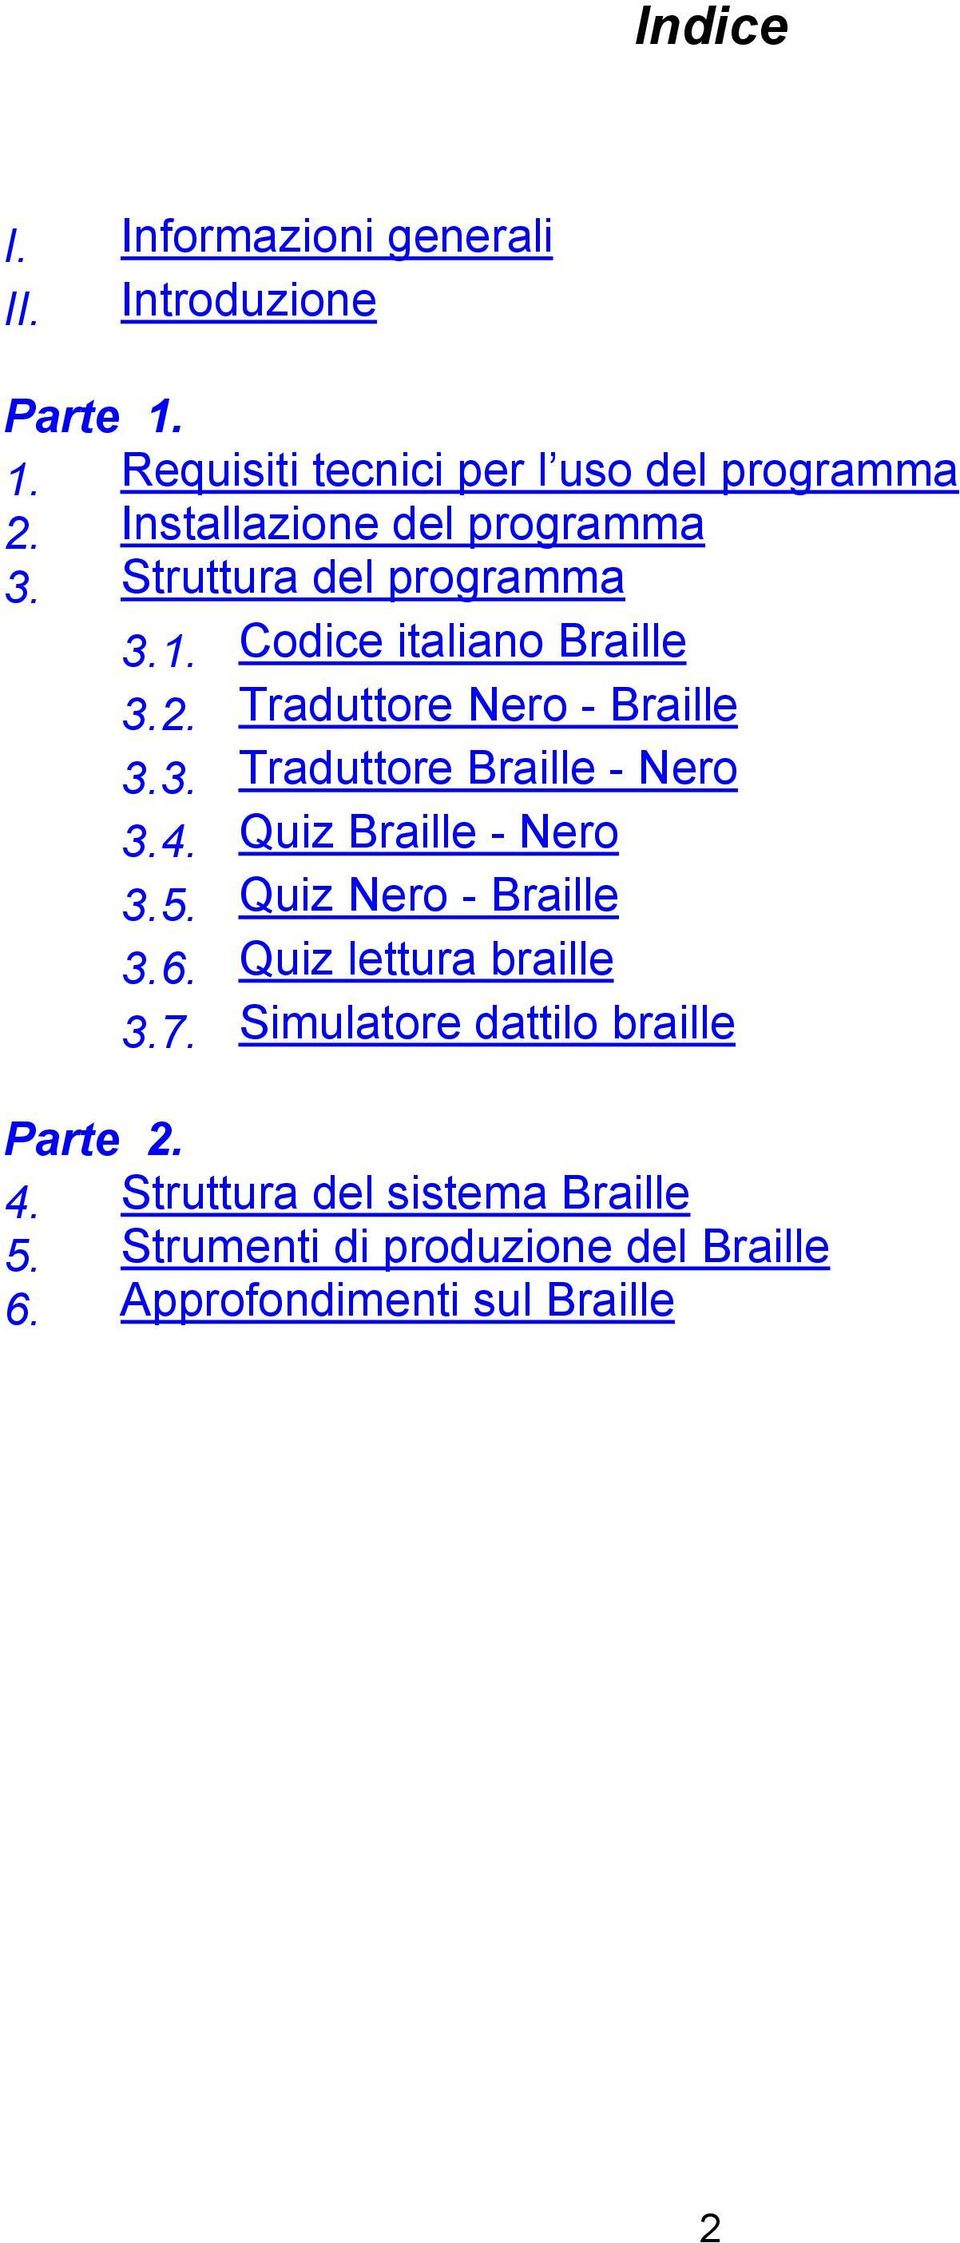 4. Quiz Braille - Nero 3.5. Quiz Nero - Braille 3.6. Quiz lettura braille 3.7. Simulatore dattilo braille Parte 2. 4.